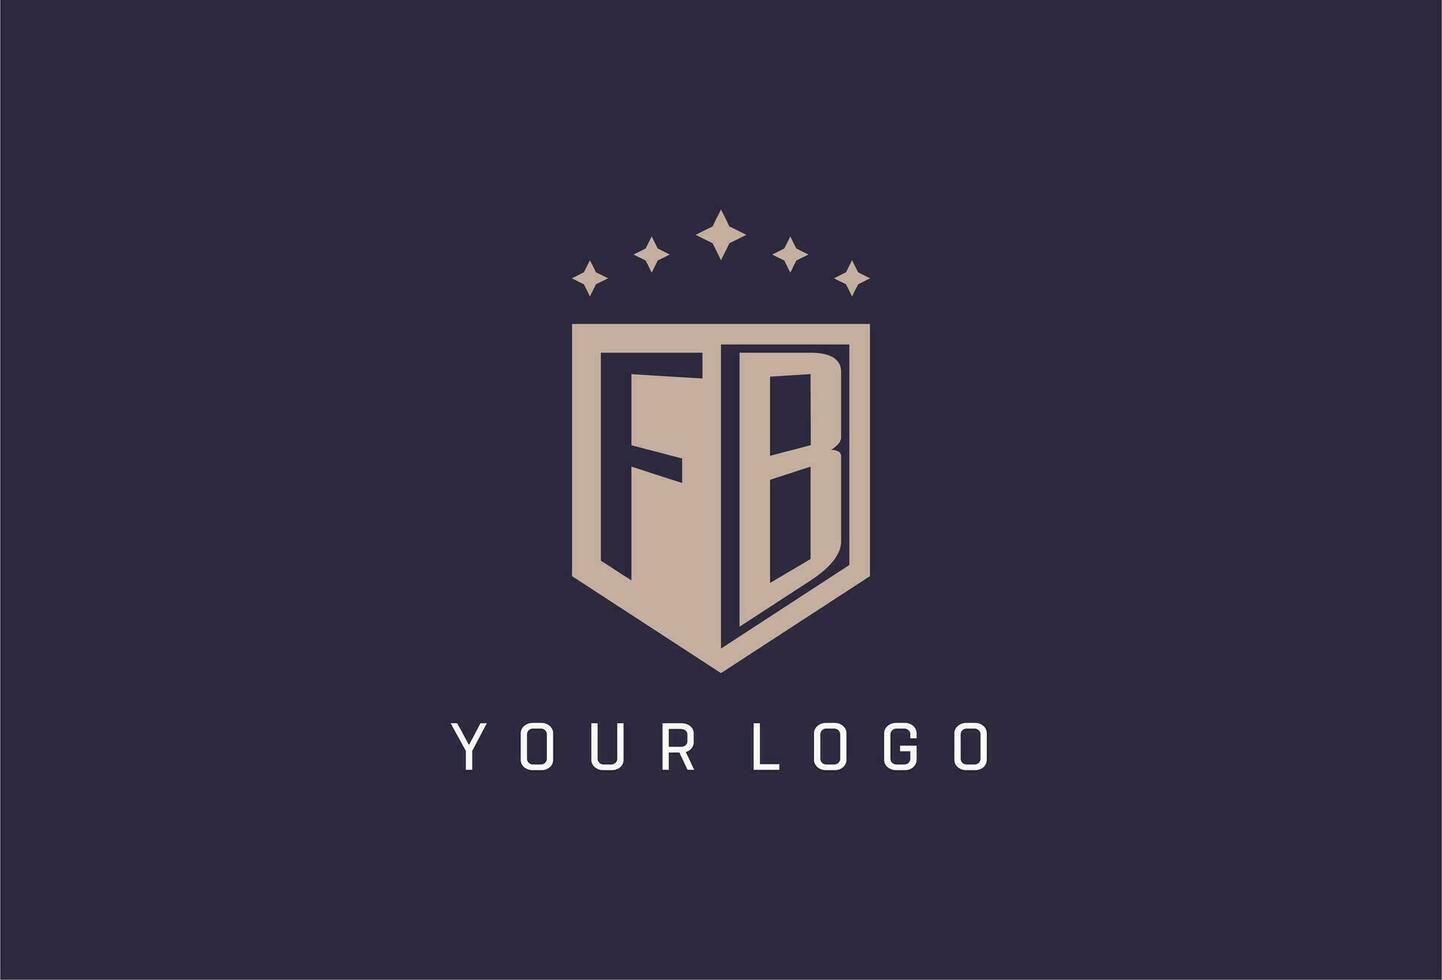 FB initial shield logo icon geometric style design vector